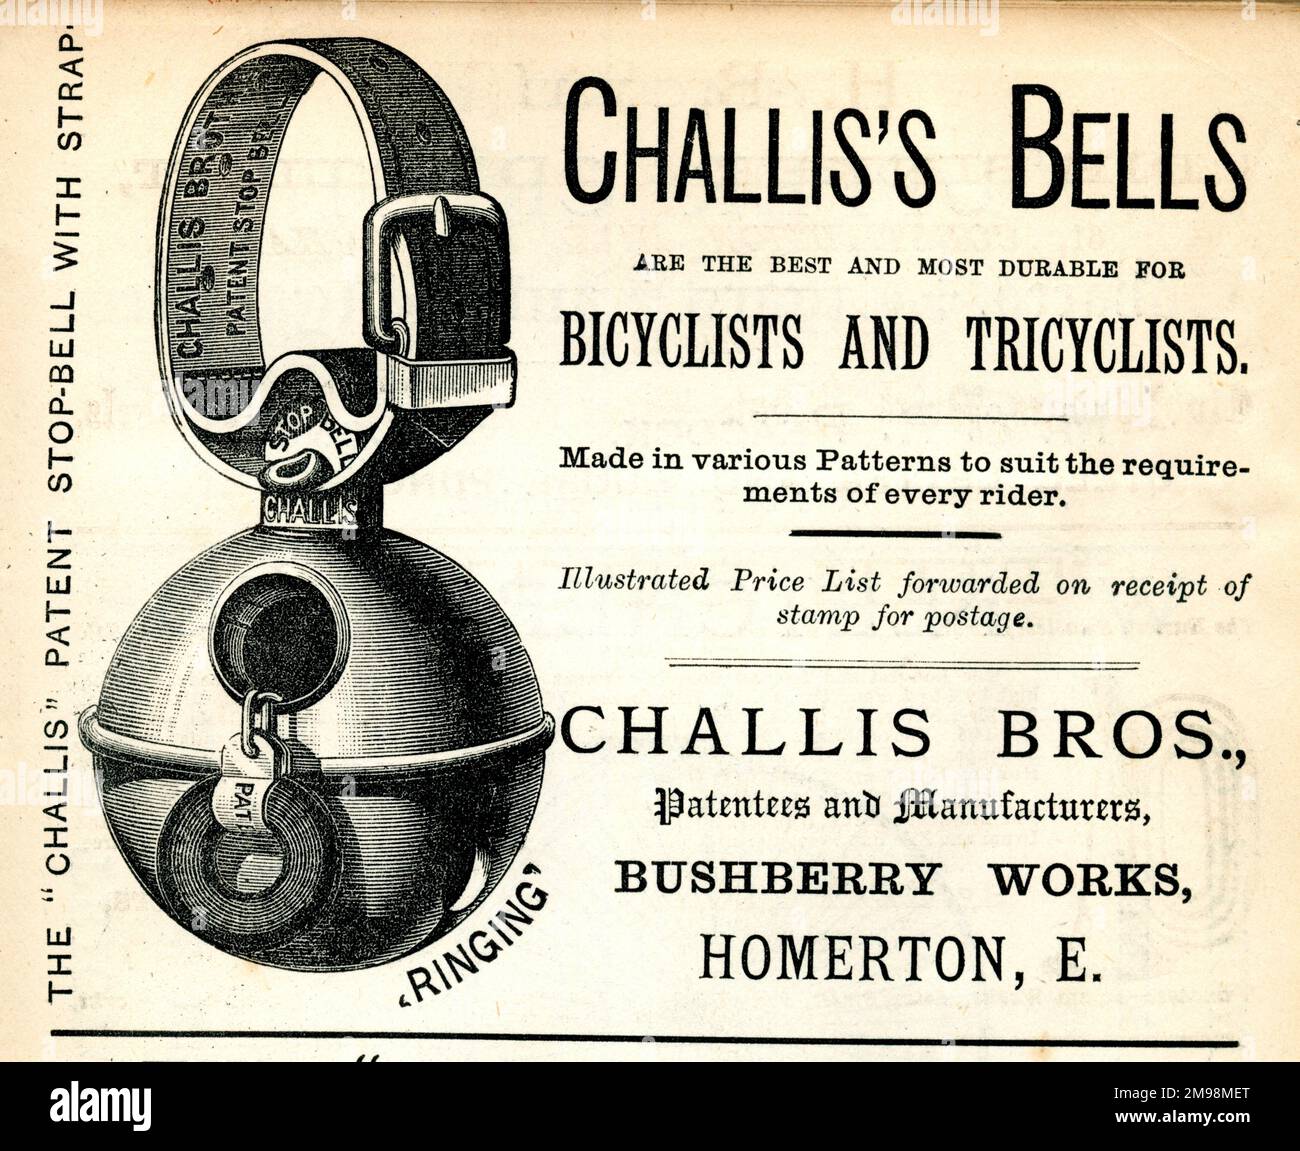 Advertisement, Challis Bros, Homerton, London, Bicycle Bells. Stock Photo